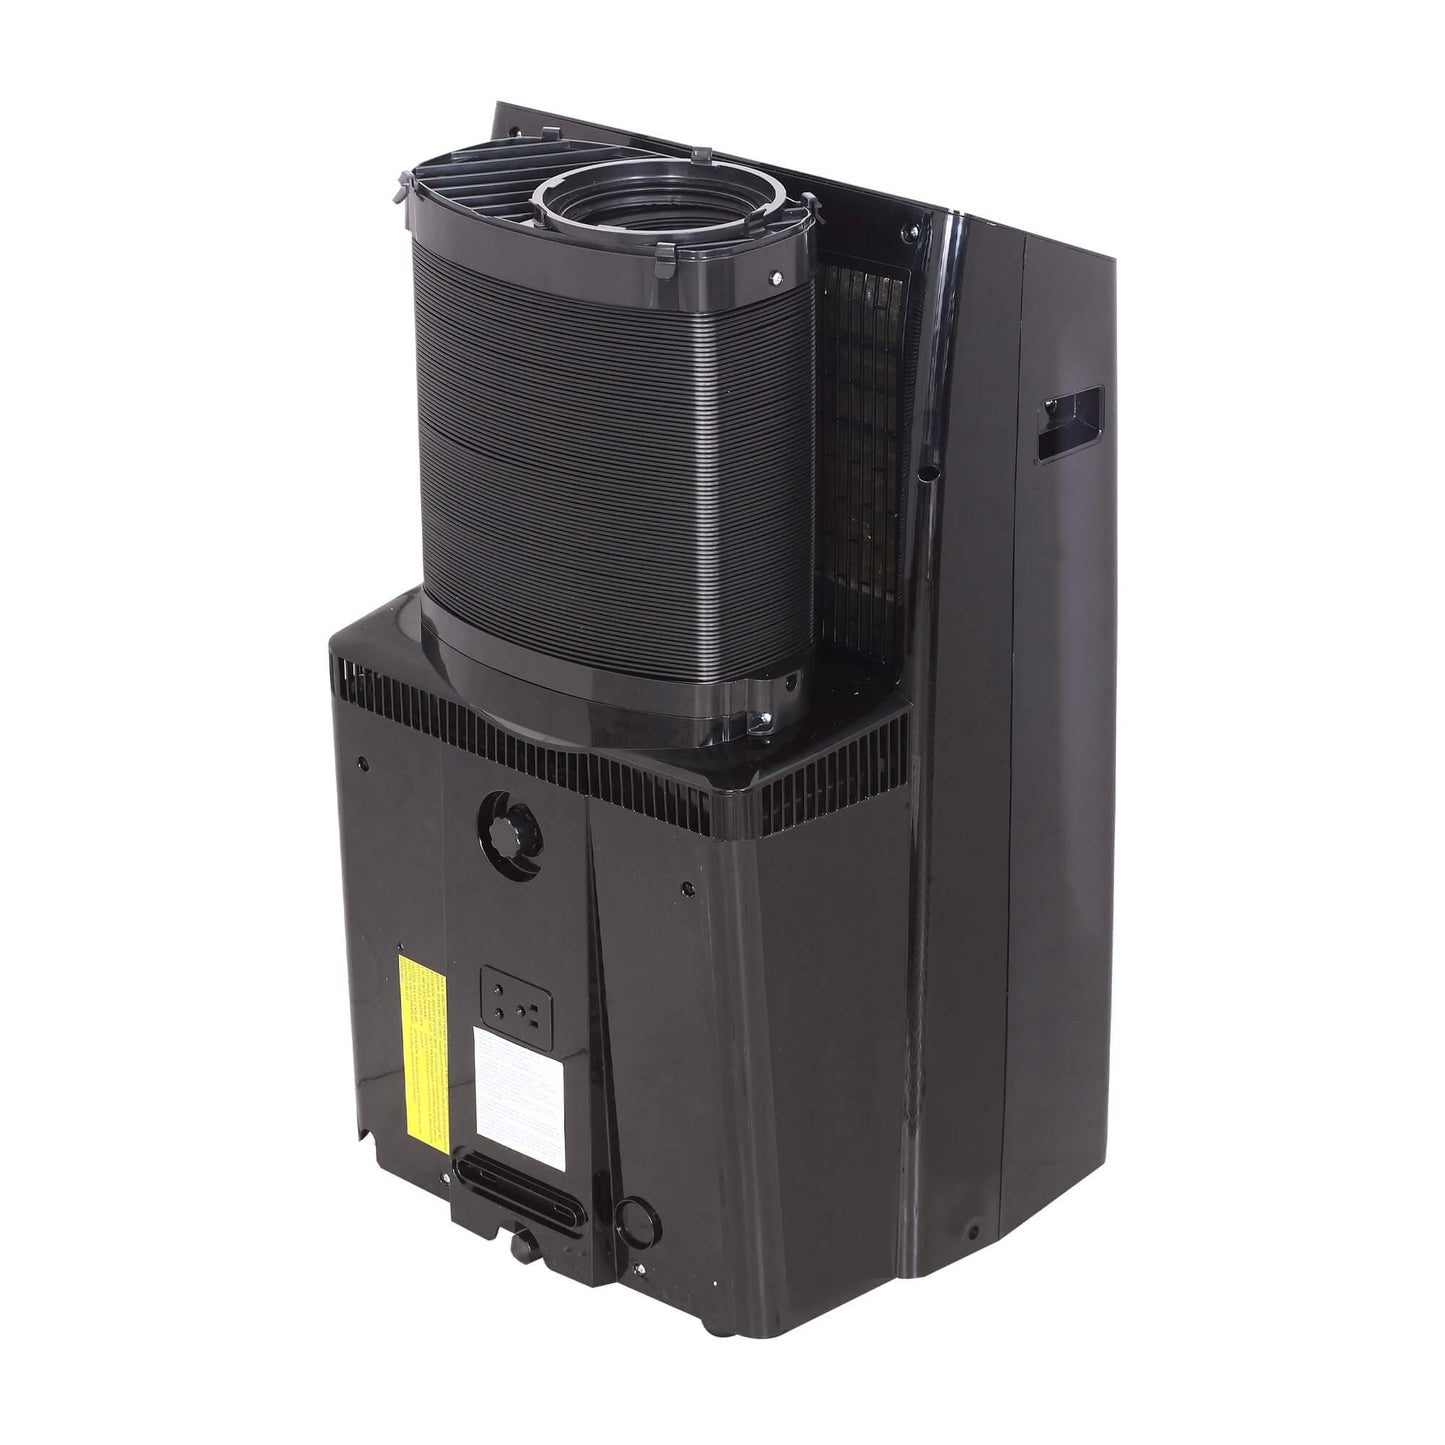 Danby 14000 BTU SACC 3-in-1 Inverter Portable Air Conditioner - DPA120B9IBDB-6 (scratch and dent)